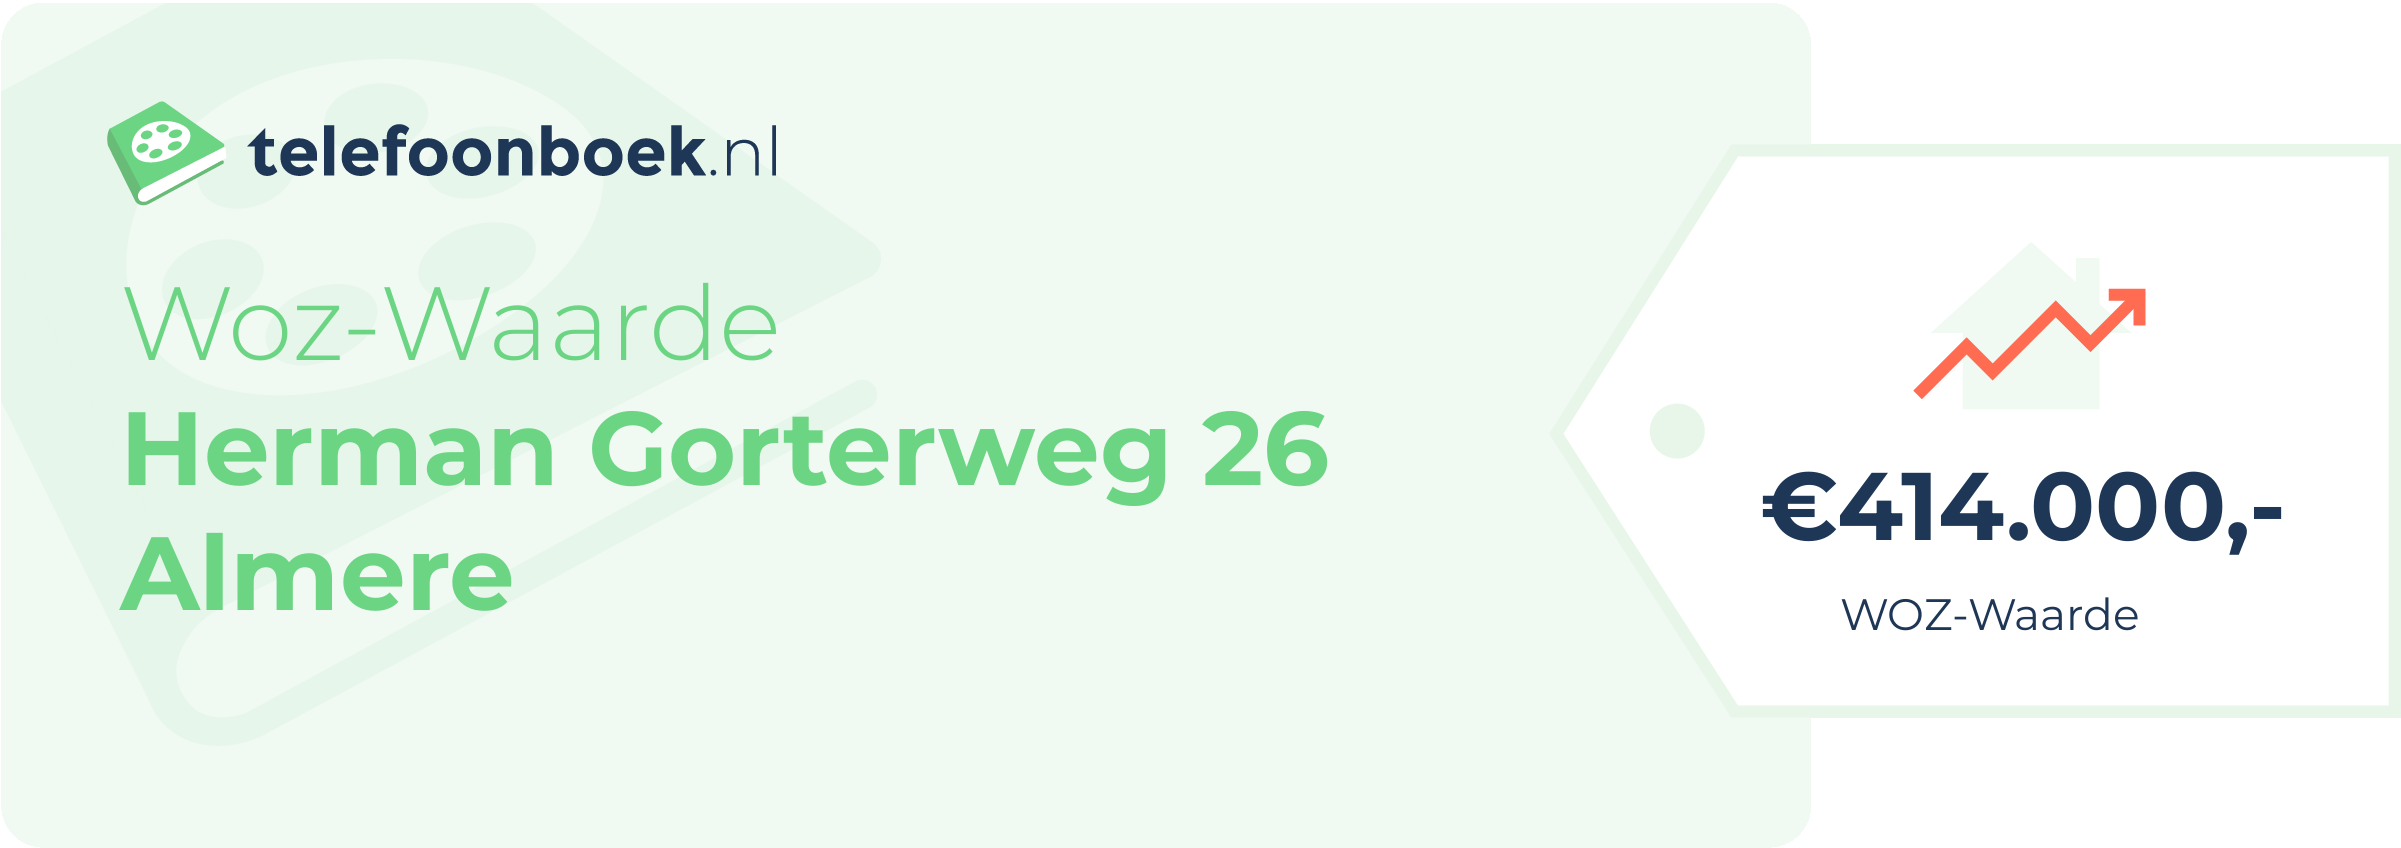 WOZ-waarde Herman Gorterweg 26 Almere